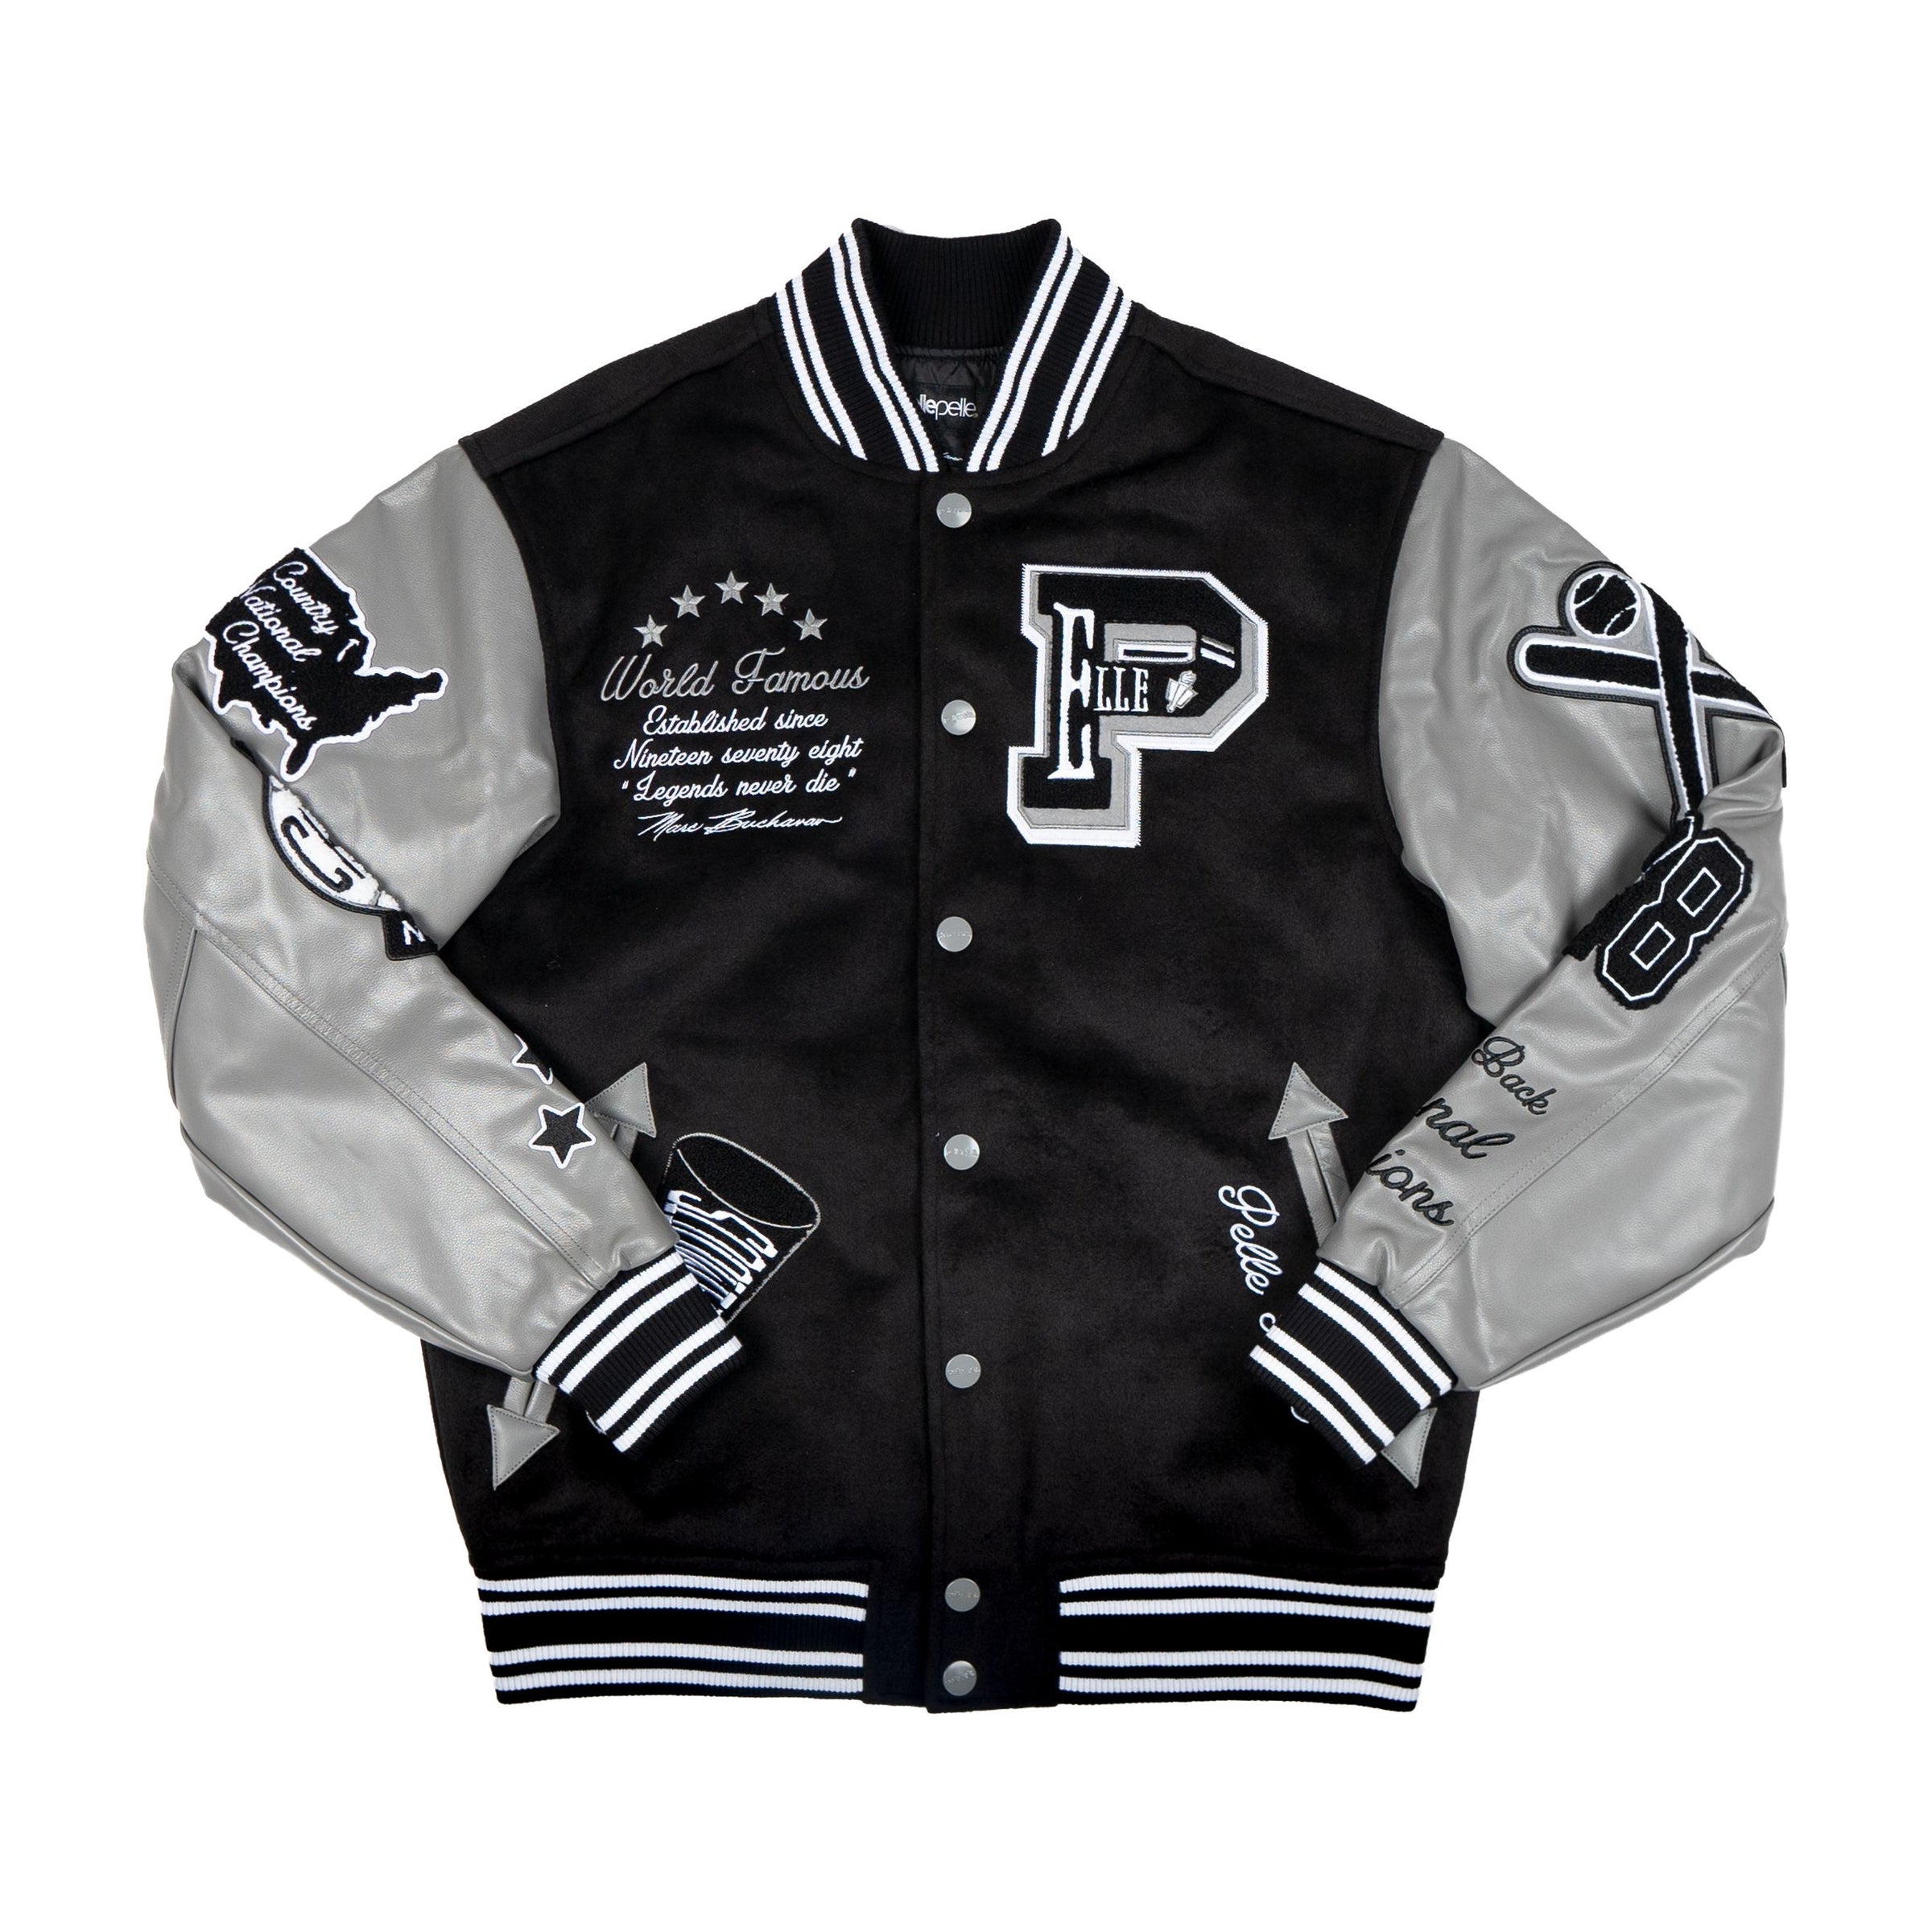 Pelle-Pelle-Black-World-Famous-Wool-and-Leather-Varsity-Jacket.jpg